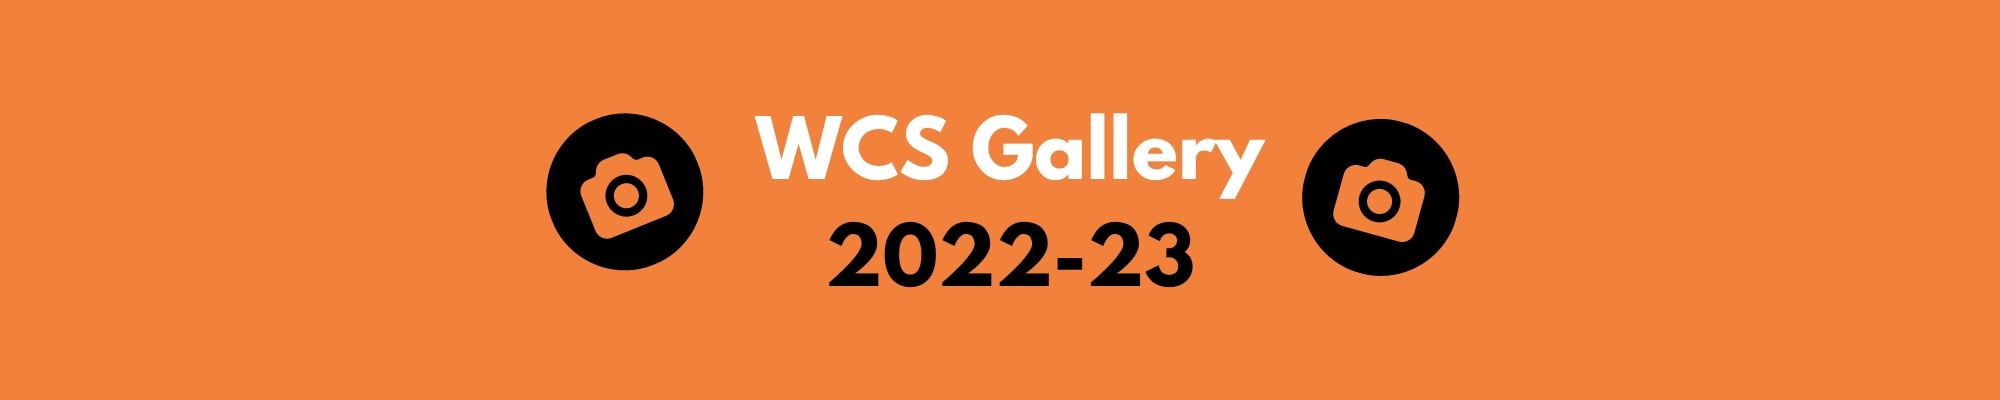 WCS gallery 2022-2023 black camera icons on orange background